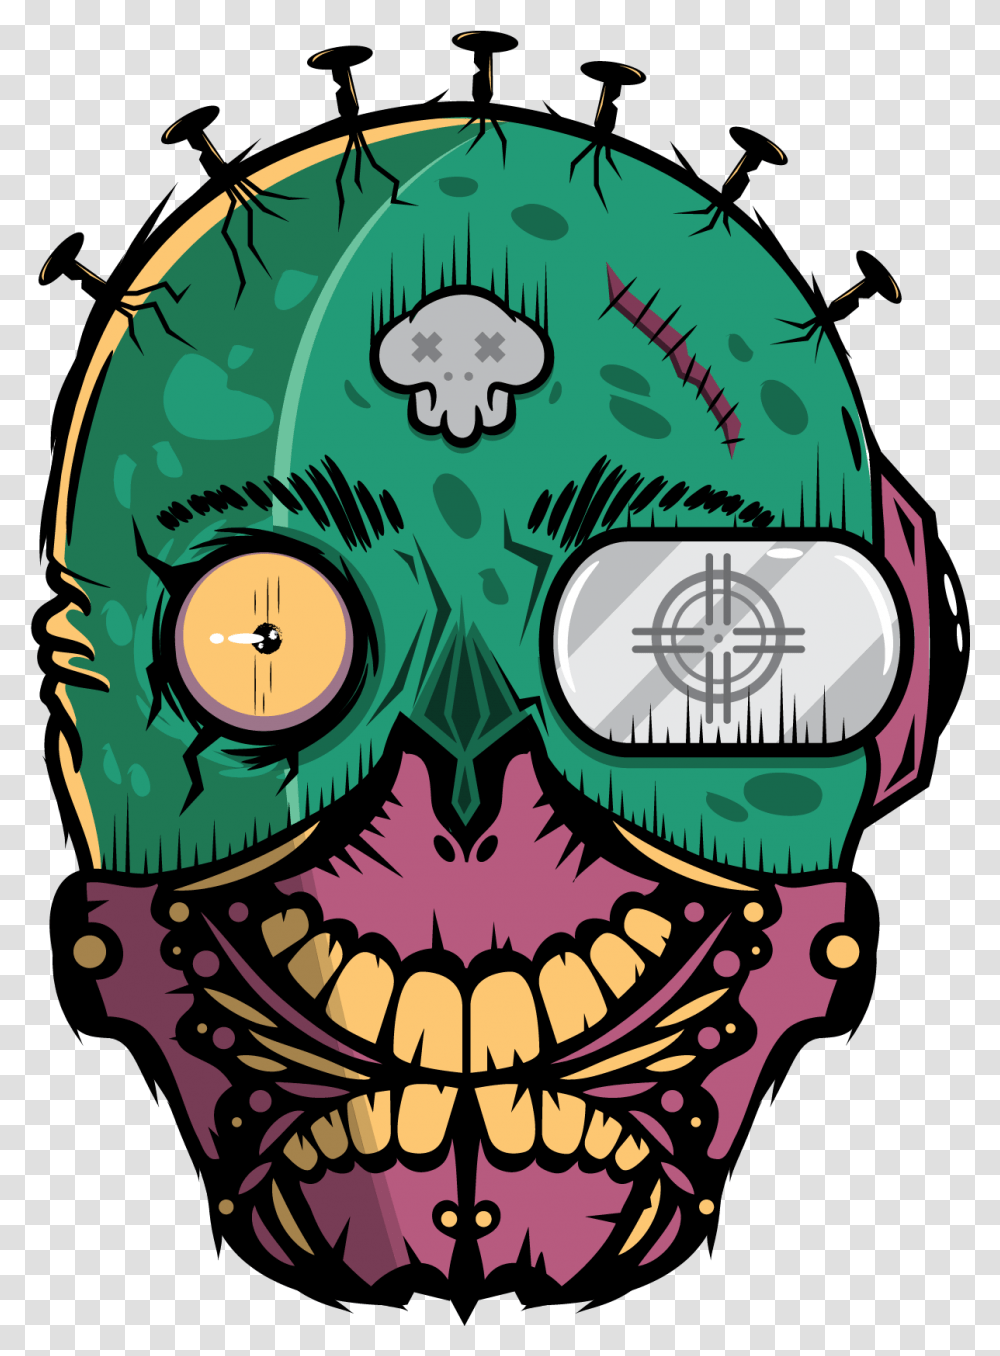 Zombie Clipart Skull Illustration Vector On Behance, Building, Architecture, Pillar, Column Transparent Png